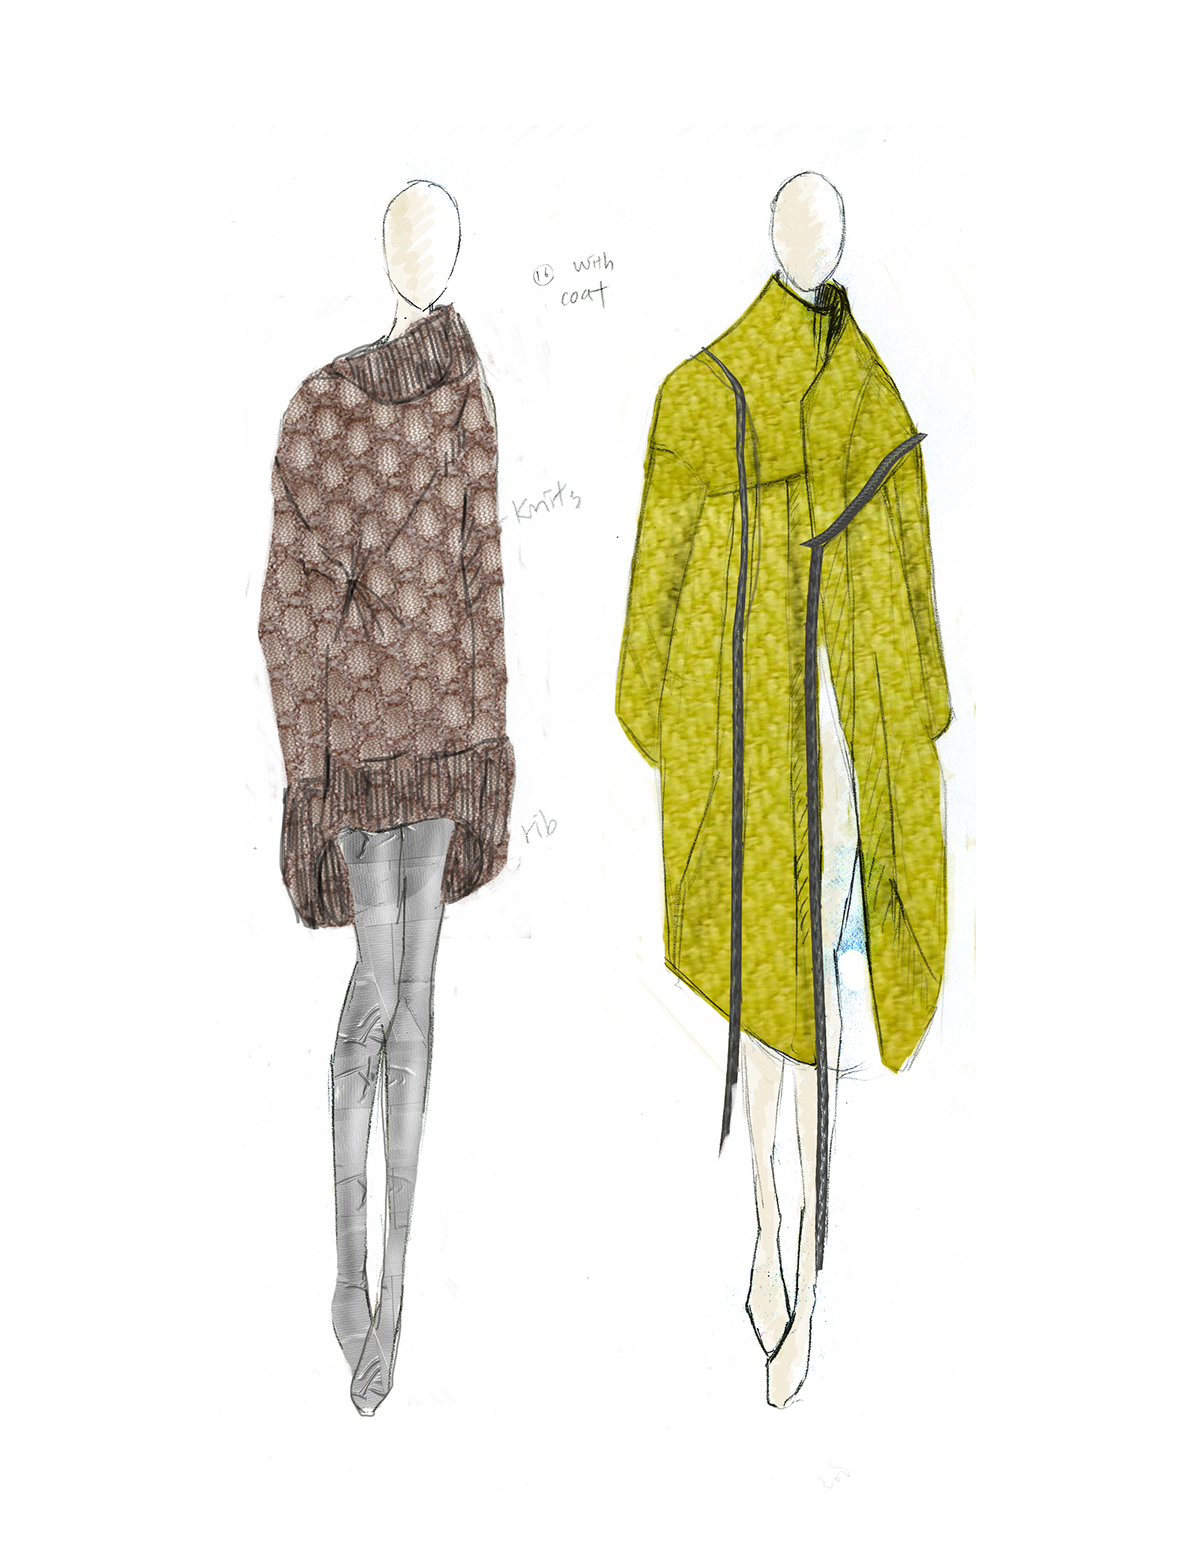 SAIC Fashion Rewinding stockholm syndrome Senior Collection spring collection fashion illustration